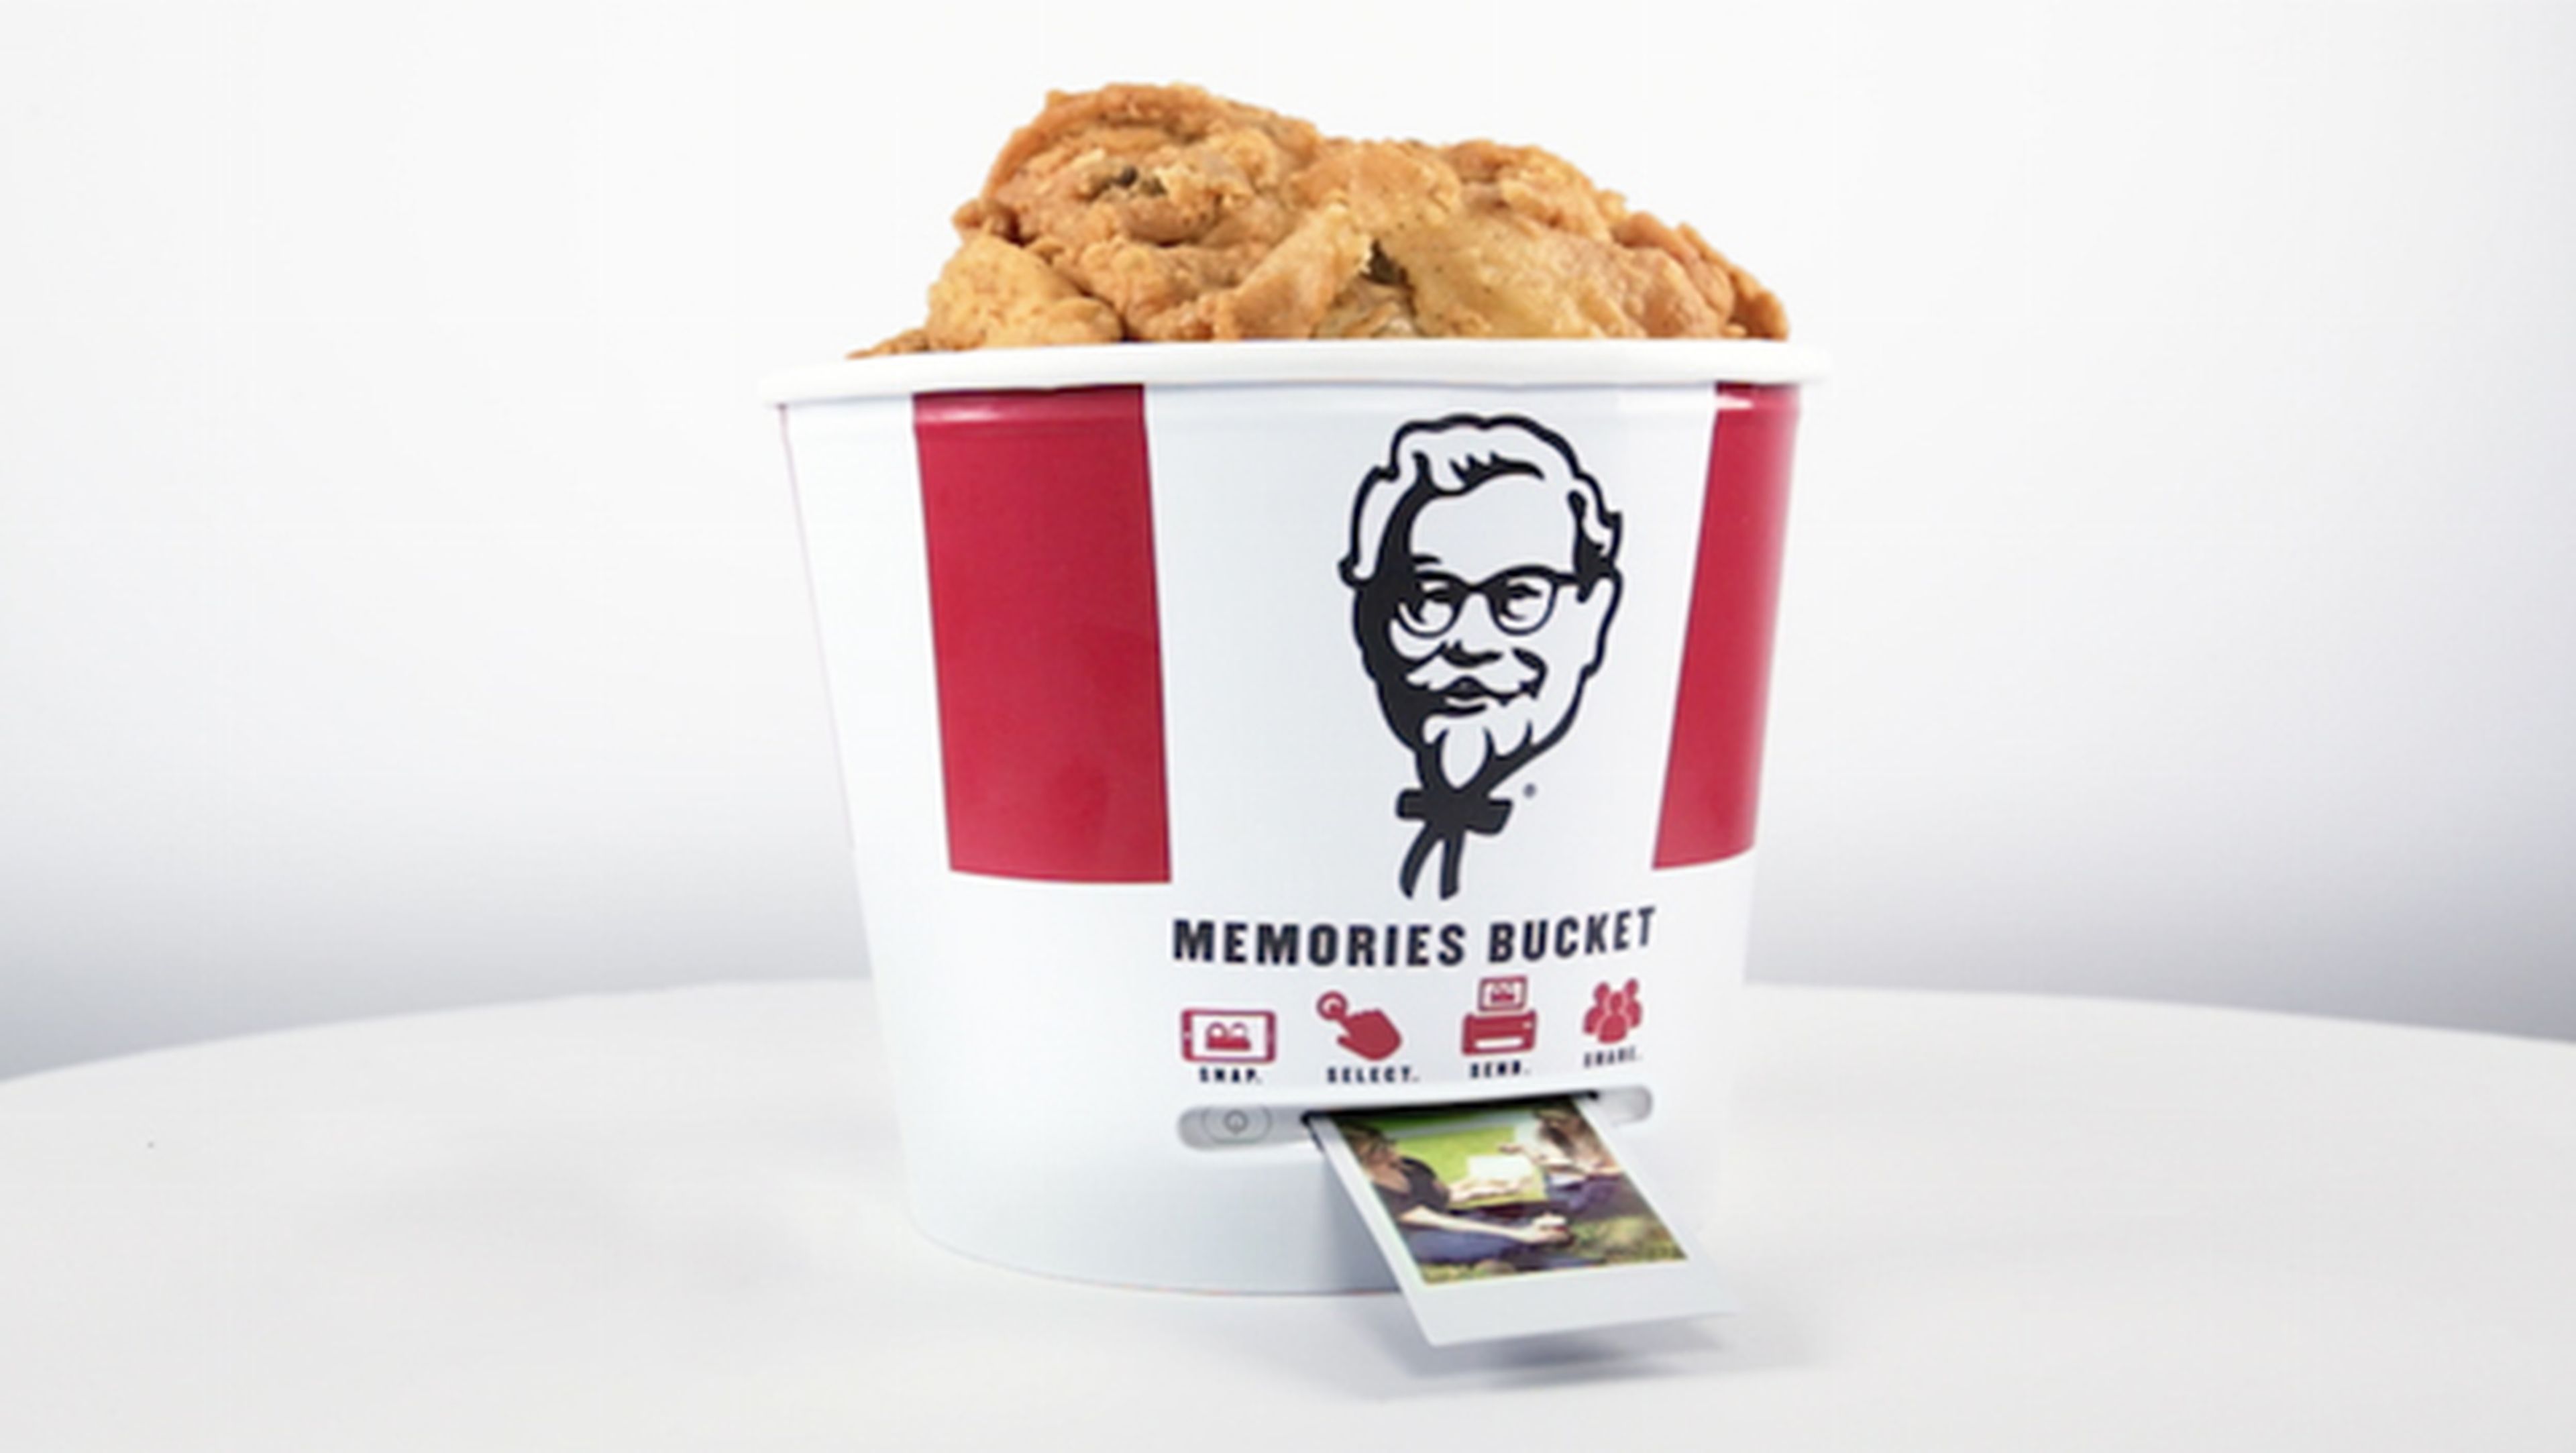 KFC crea un cubo de edición limitada que imprime fotos